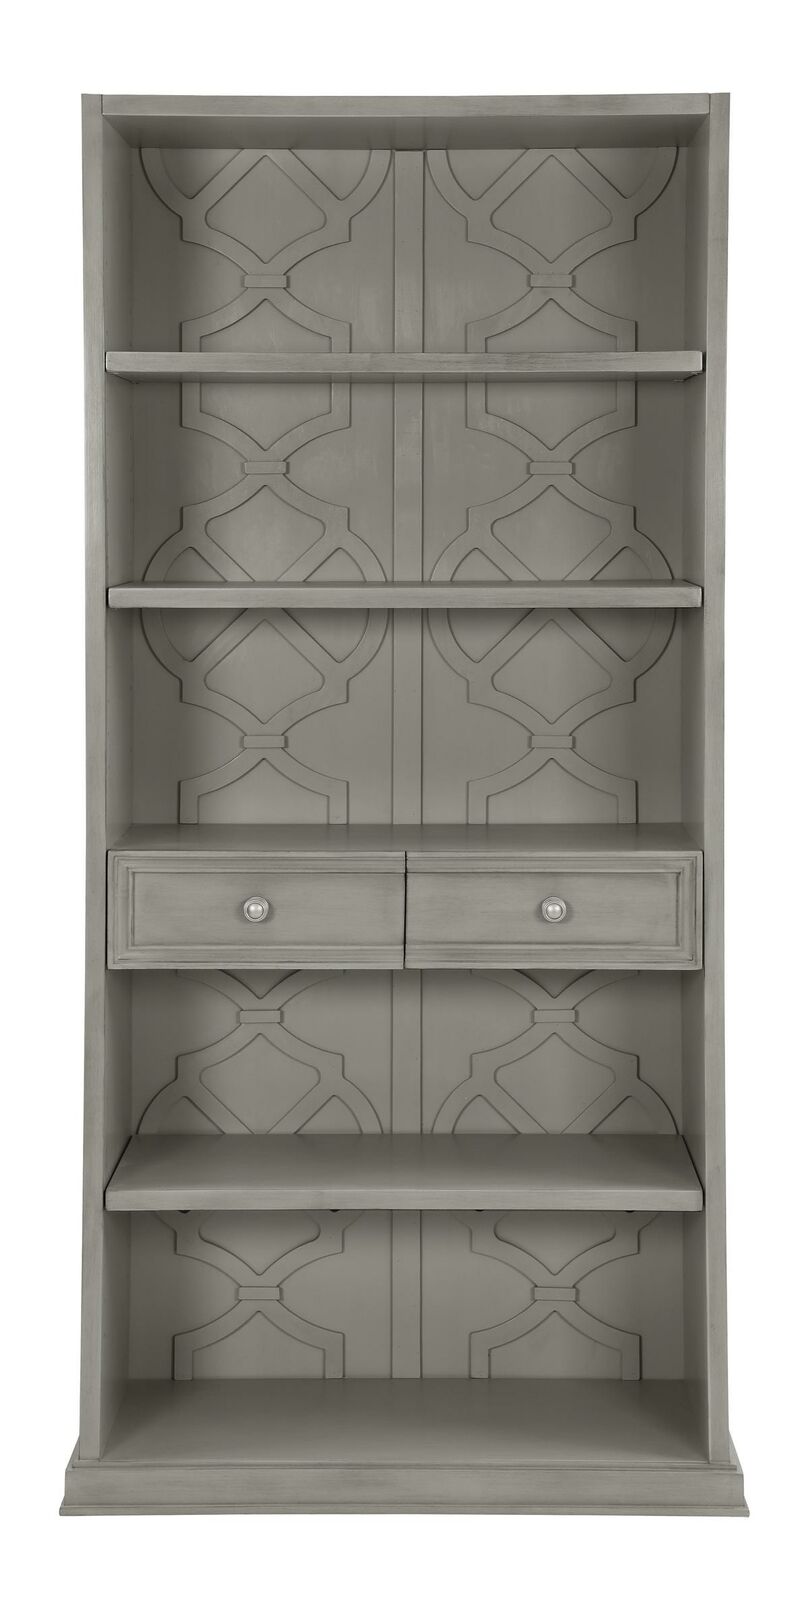 Filing cabinet showcase bookcase shelves cupboards shelf office living room furnishings